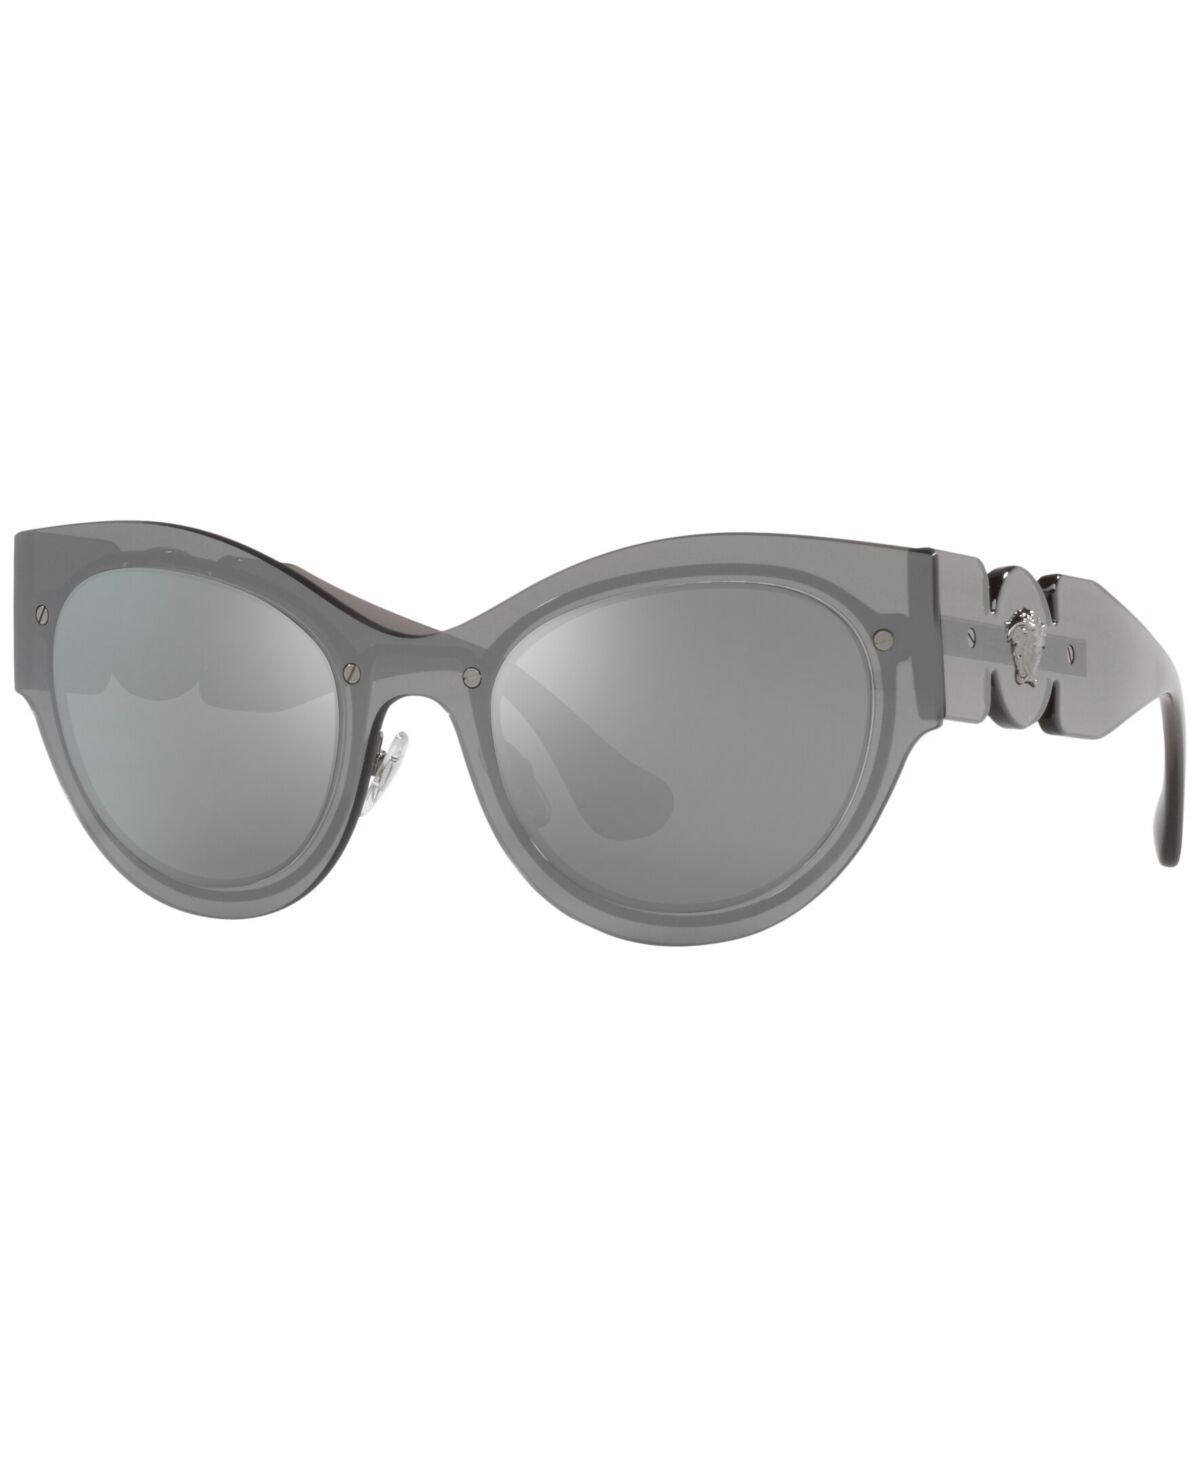 Versace Women's Sunglasses, VE2234 - Transparent Gray Mirror Silver-Tone